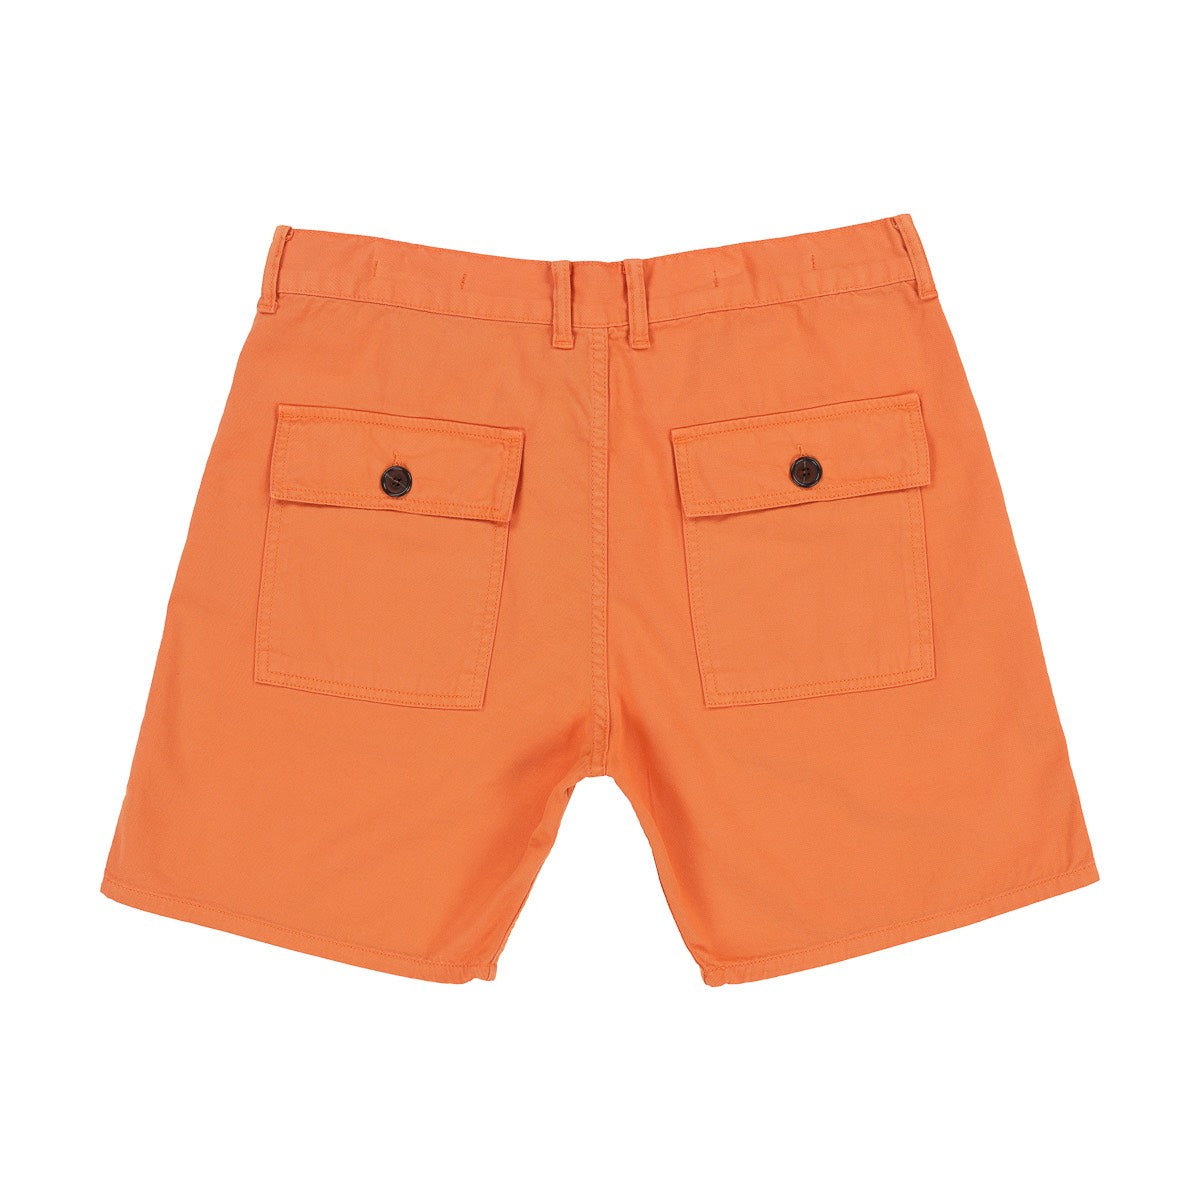 Trestles Shorts - Tangerine